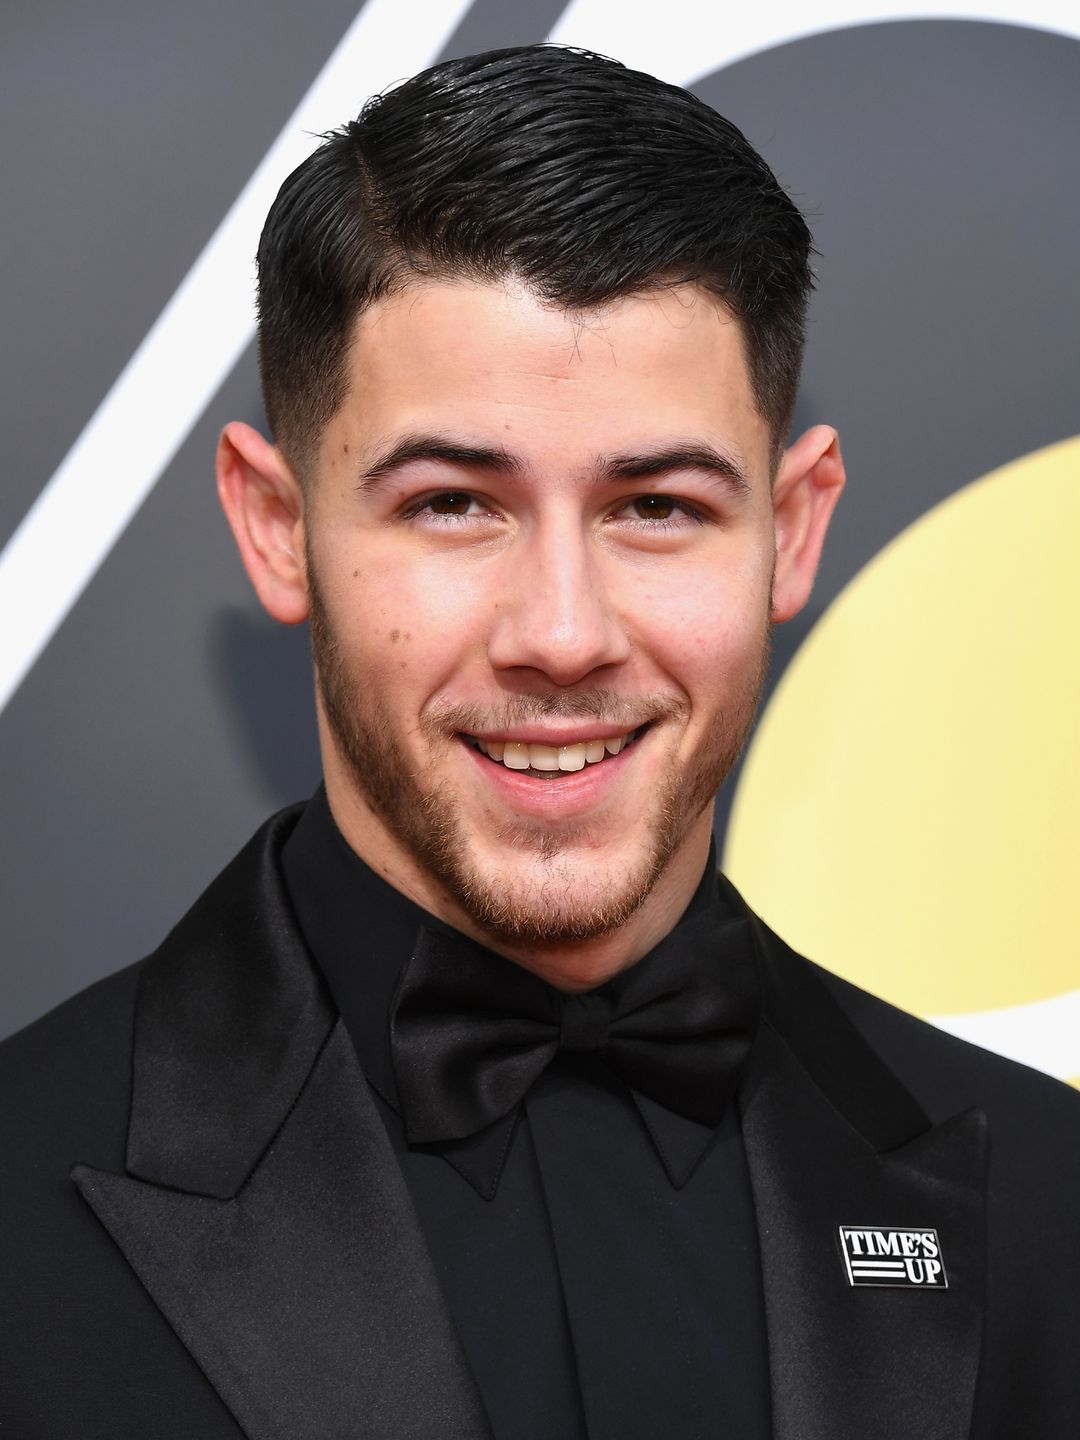 Nick Jonas appearance